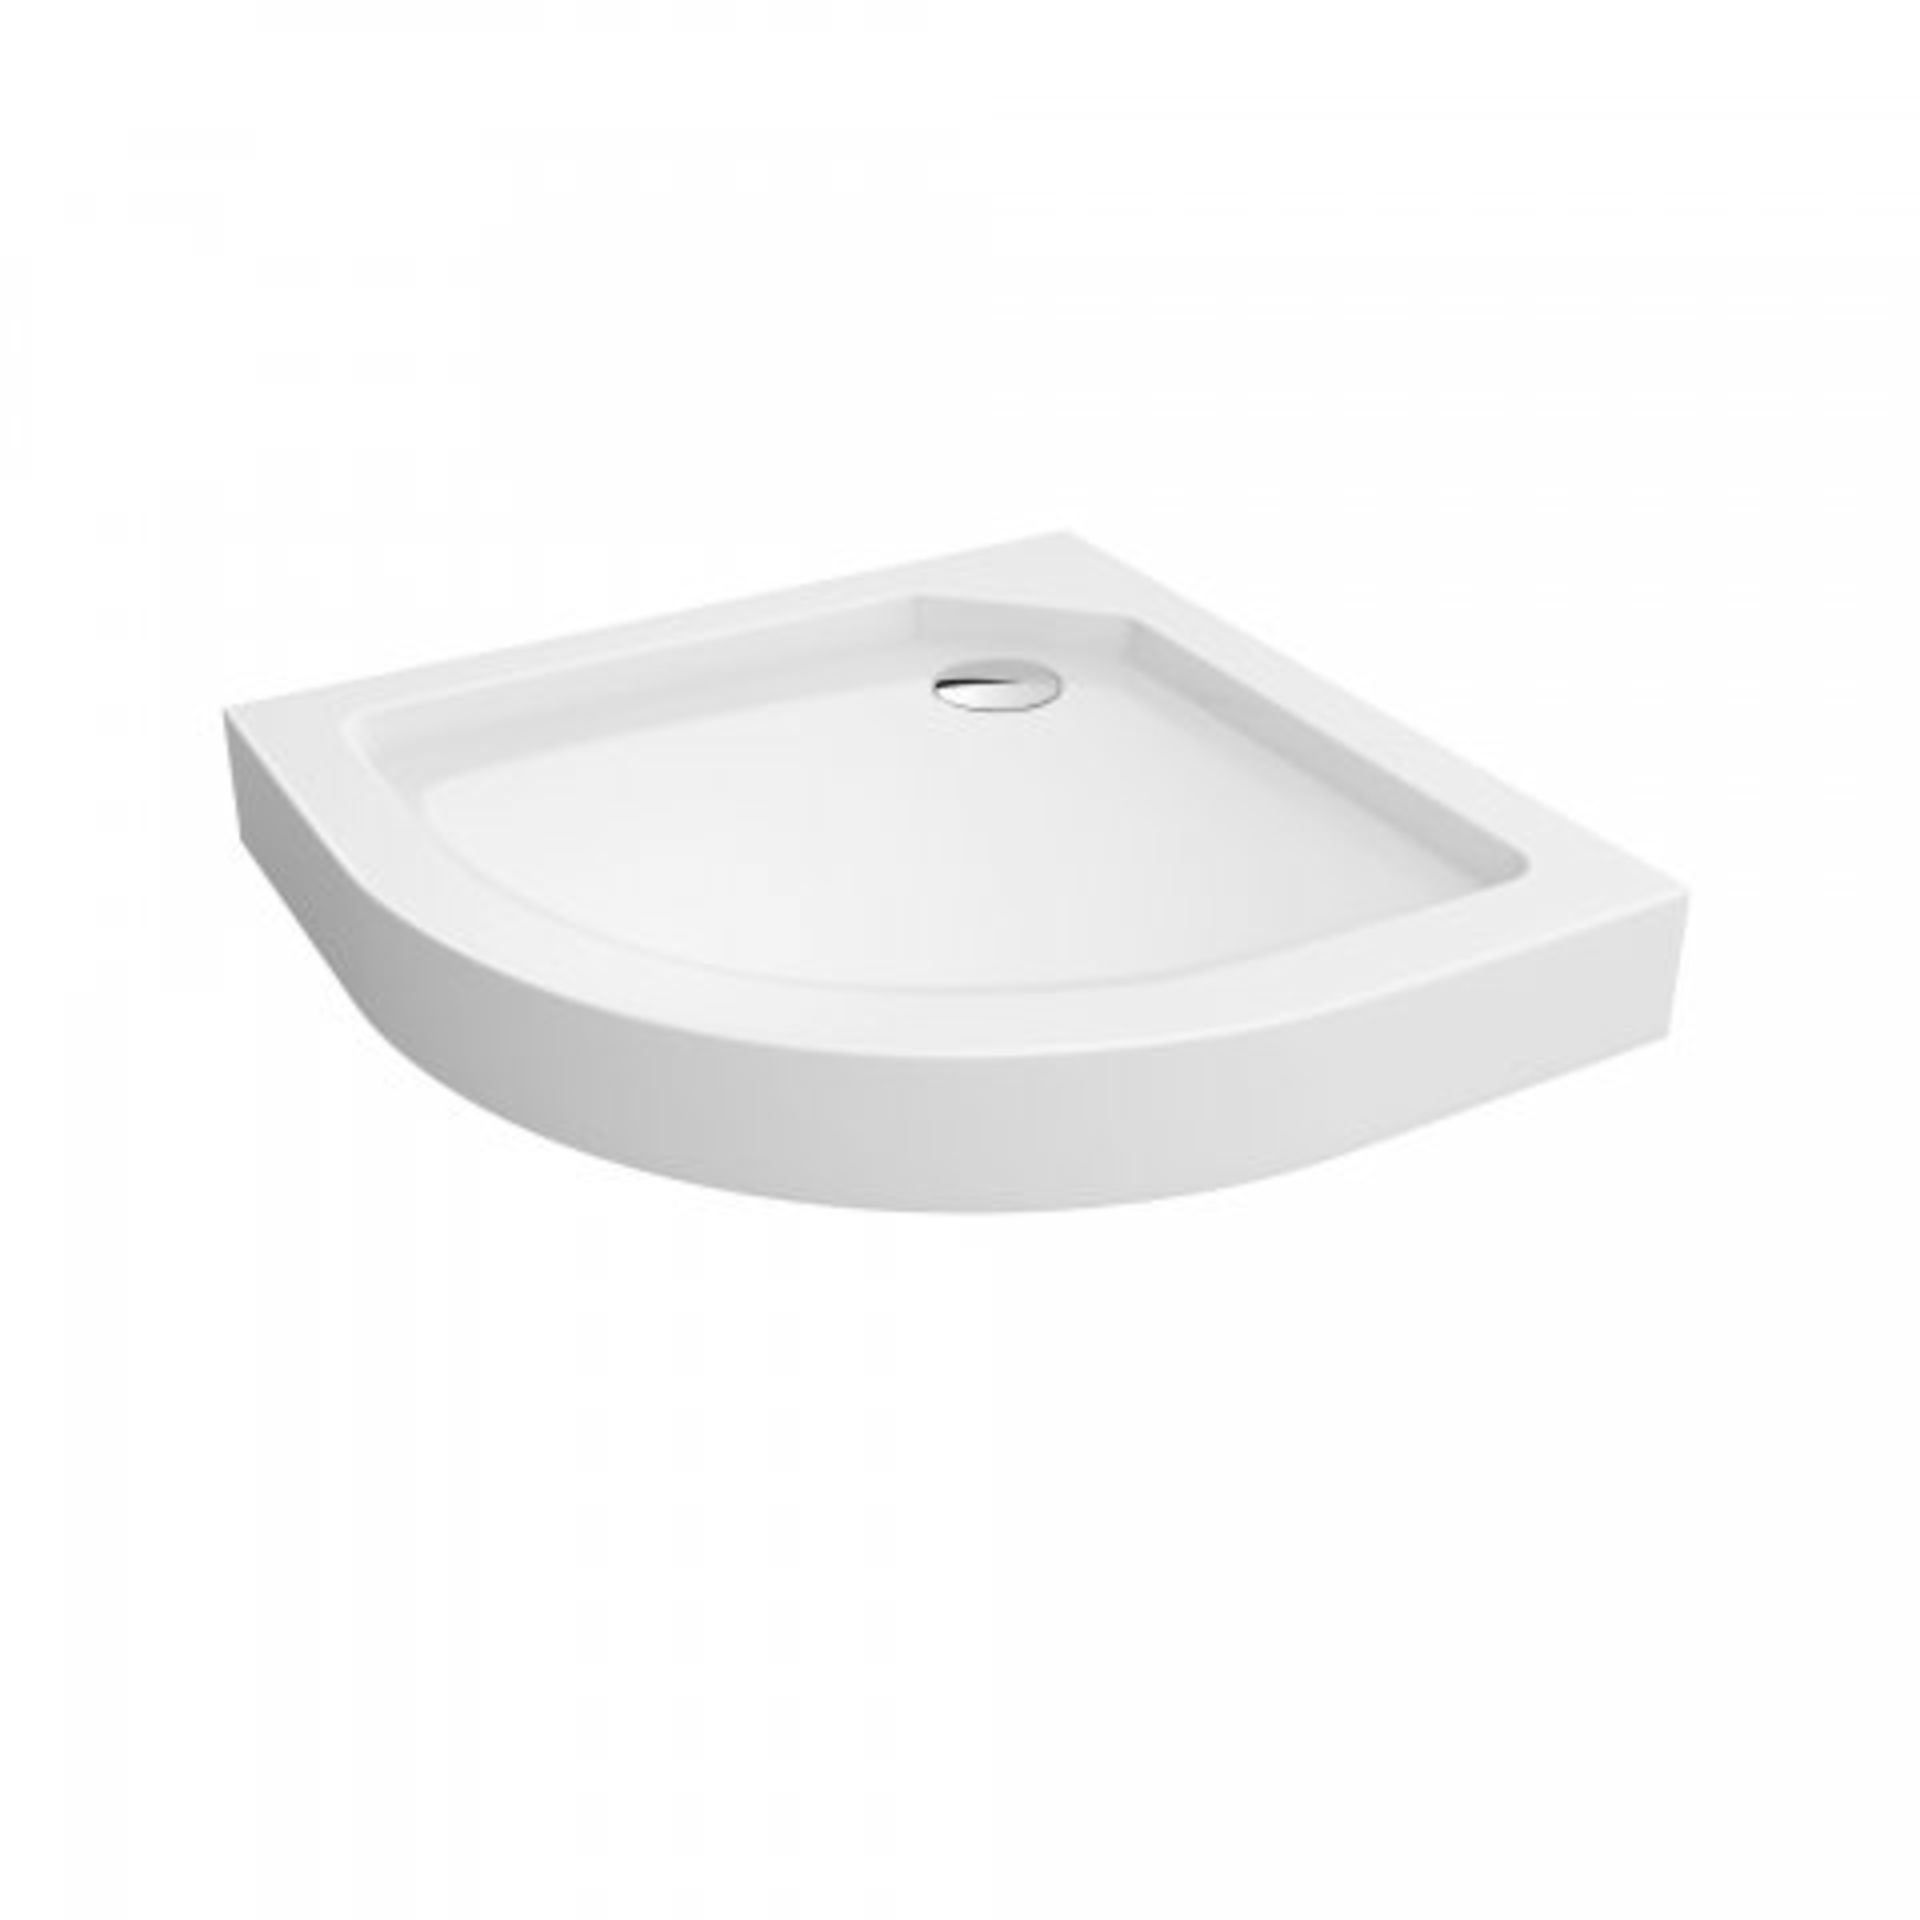 (N40) 900x900mm Quadrant Easy Plumb Shower Tray. RRP £119.99. Our brilliant white ultra slim trays